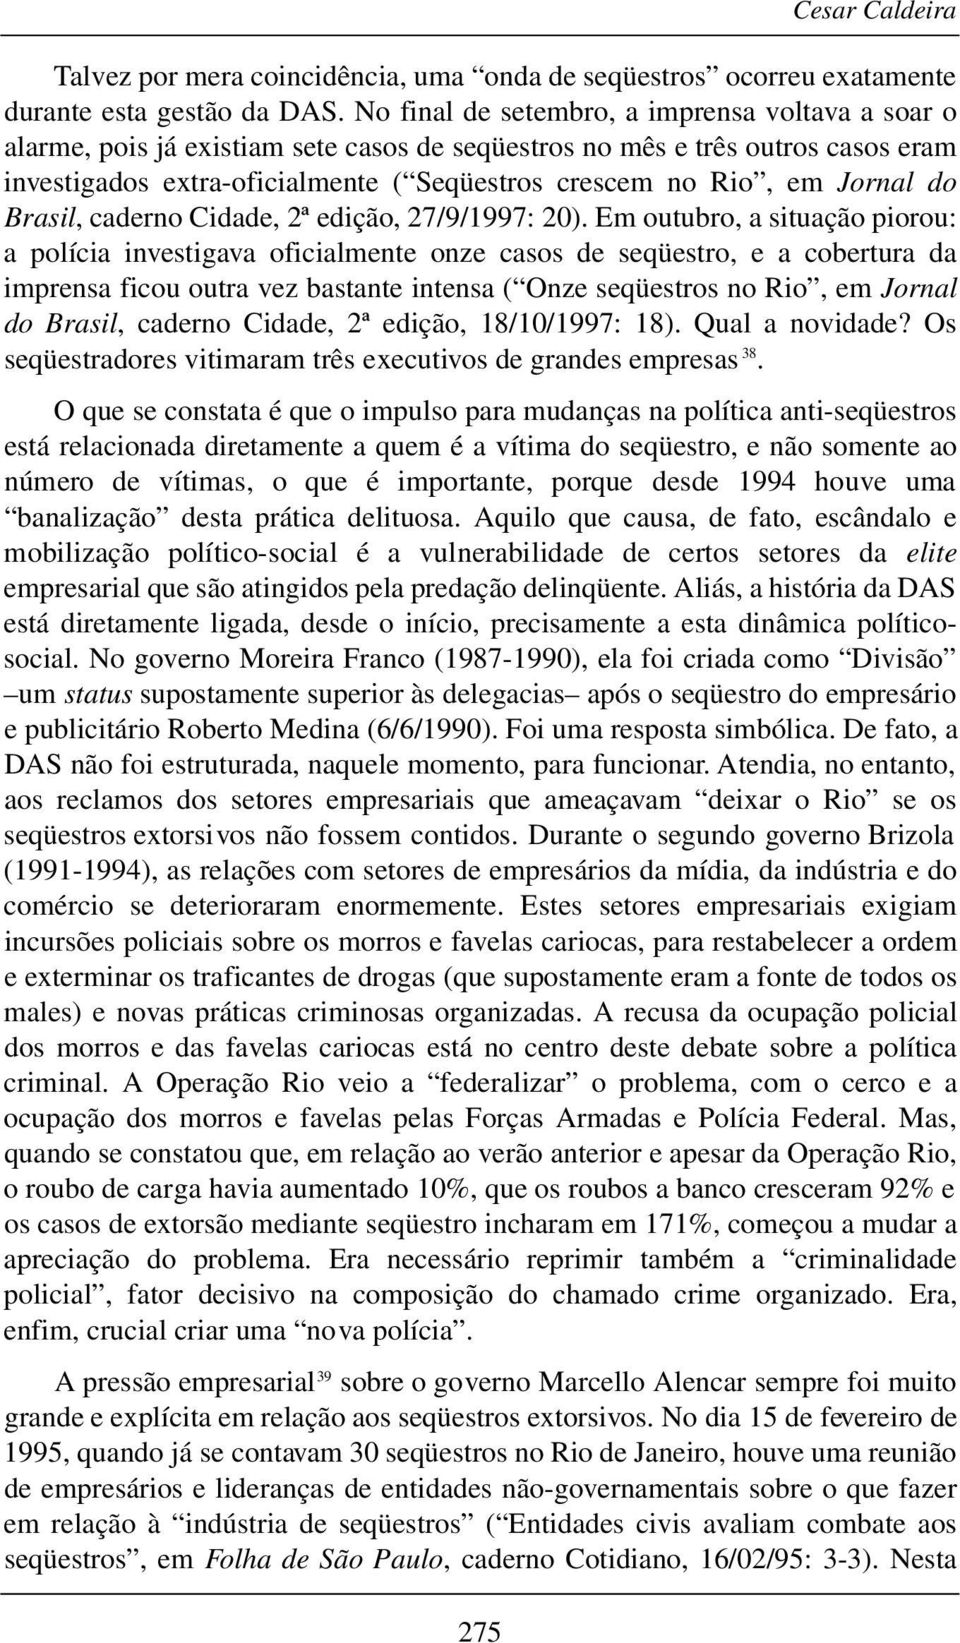 Jornal do Brasil, caderno Cidade, 2ª edição, 27/9/1997: 20).